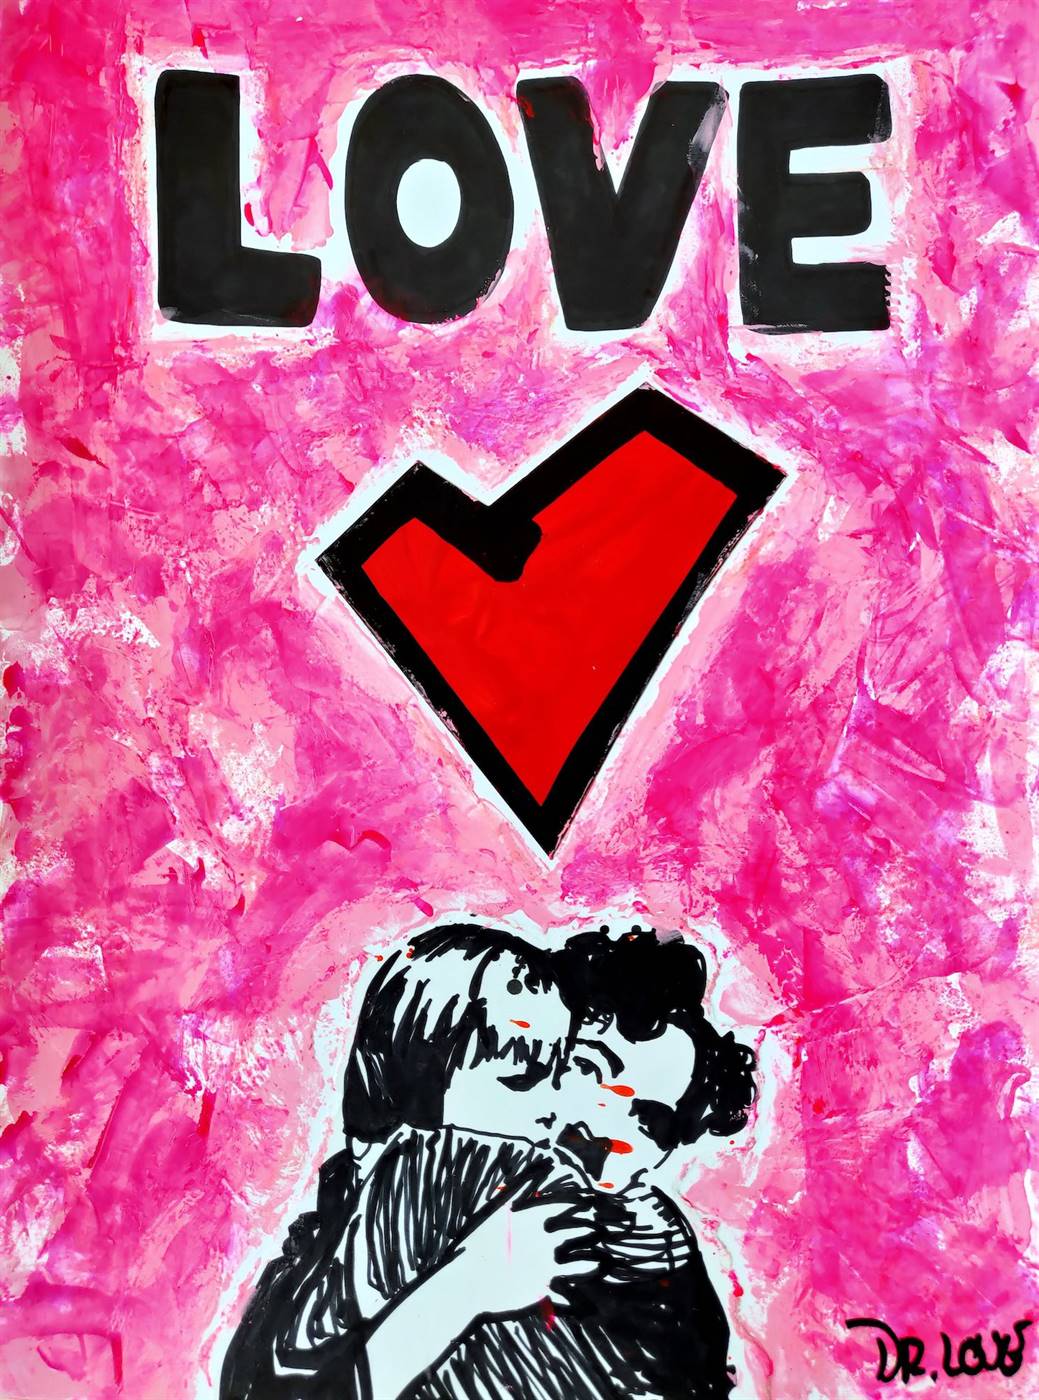 Dr. Love - Love canvas